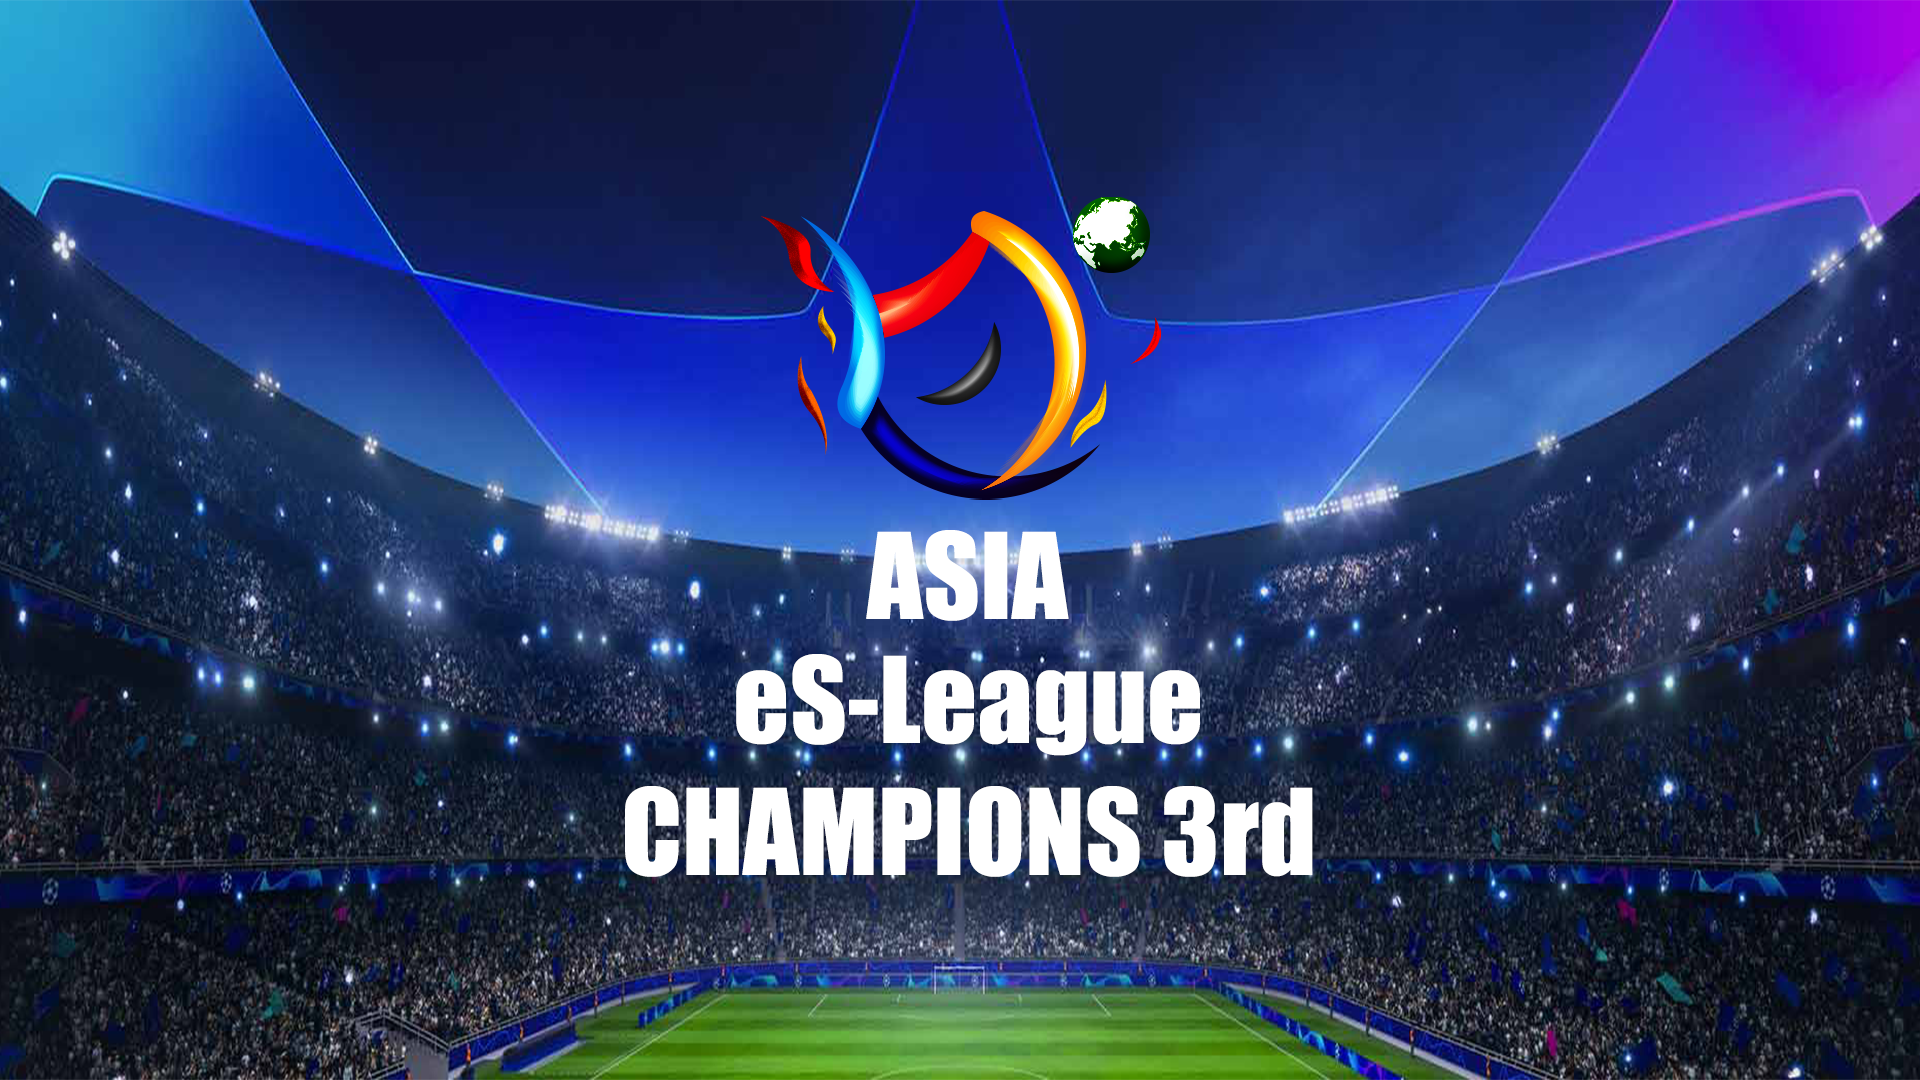 eS League CHAMPIONS 3rd Goal Collection